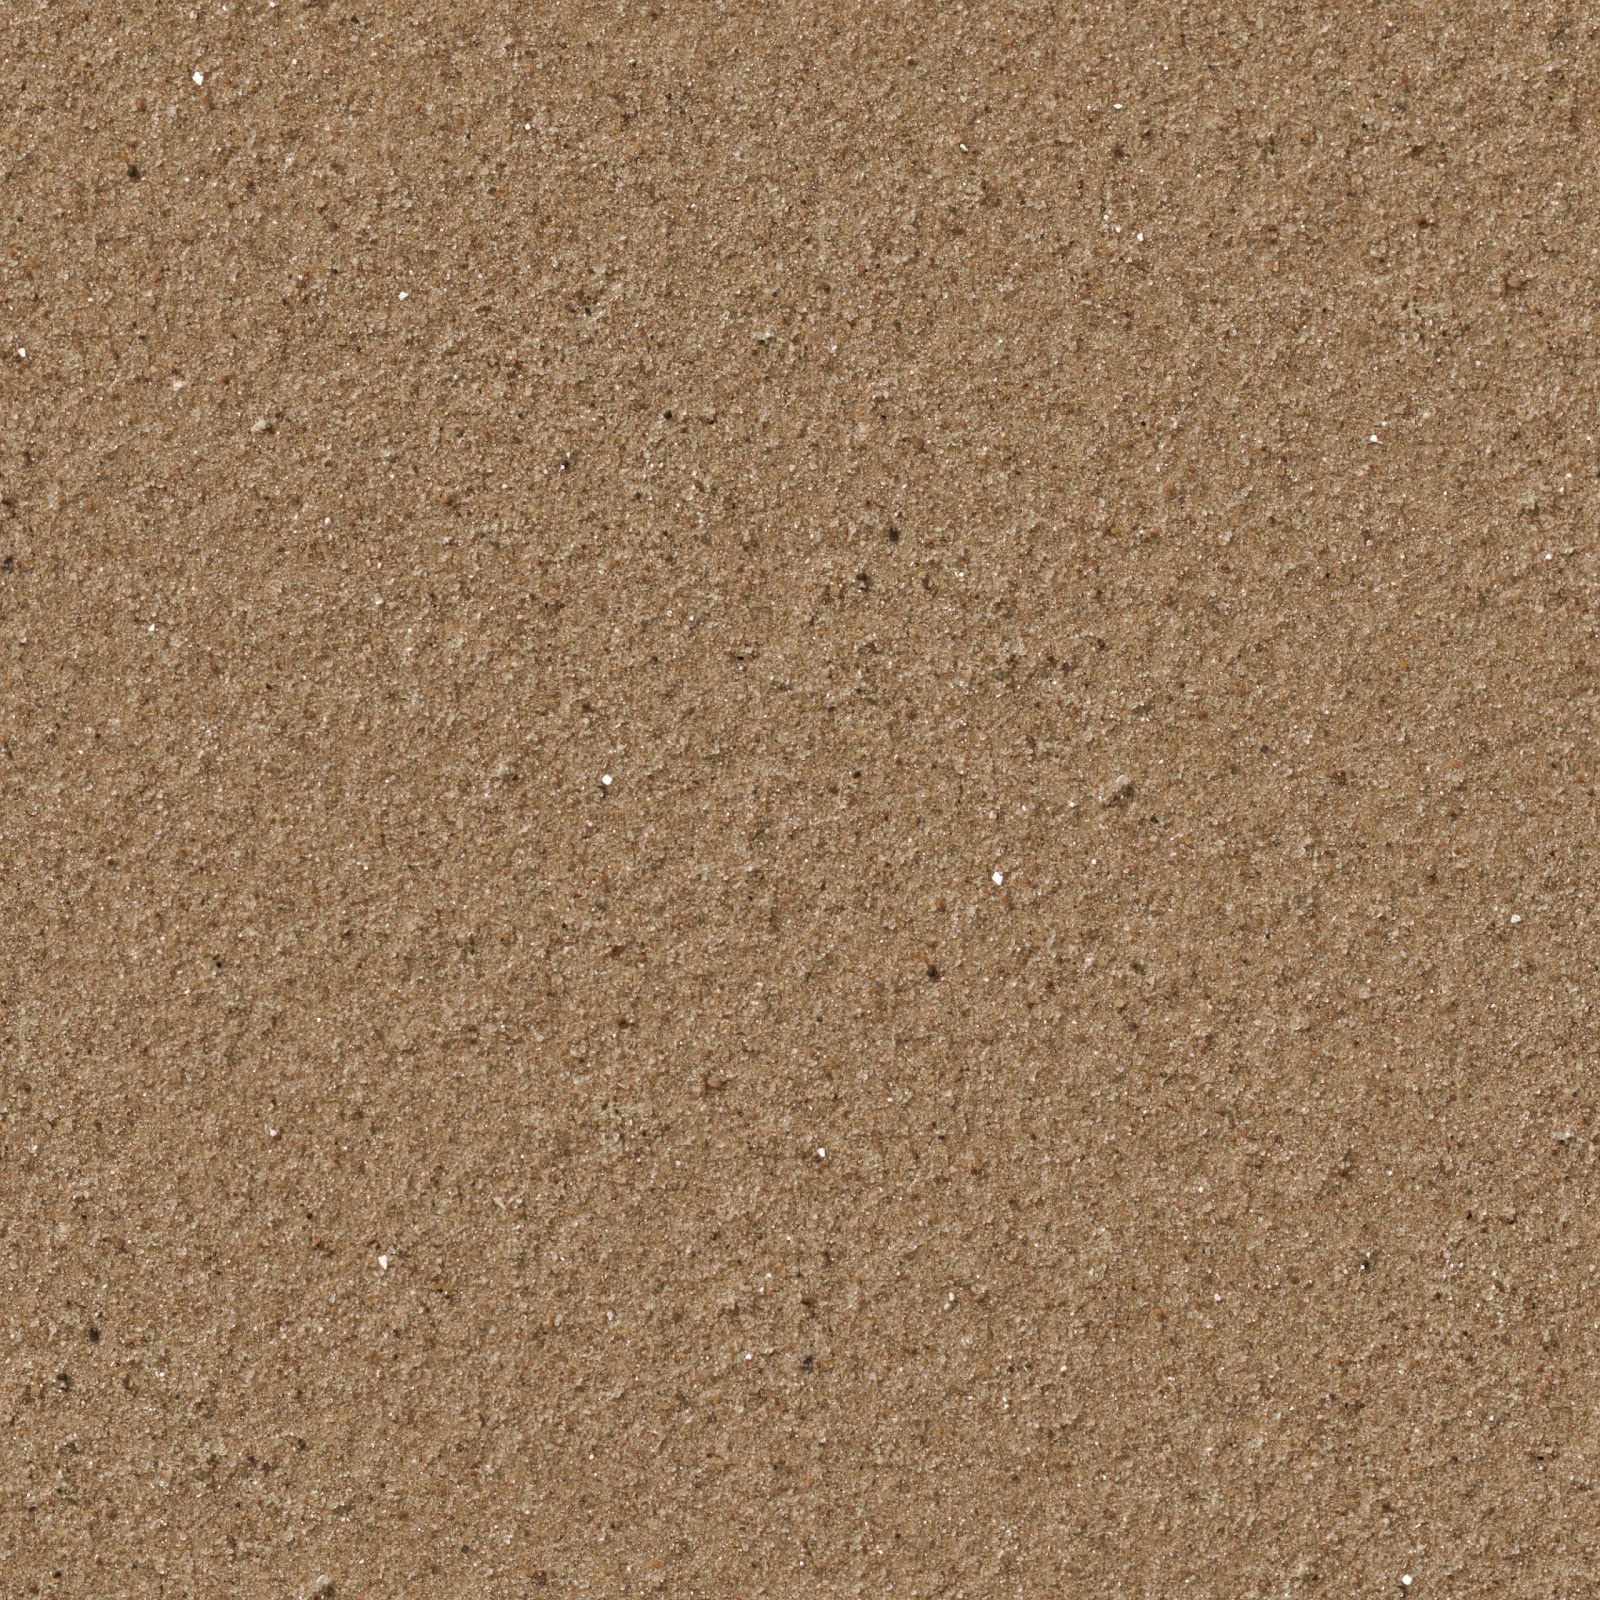 High Resolution Seamless Textures: (Sand 3) beach soil ground shore ...